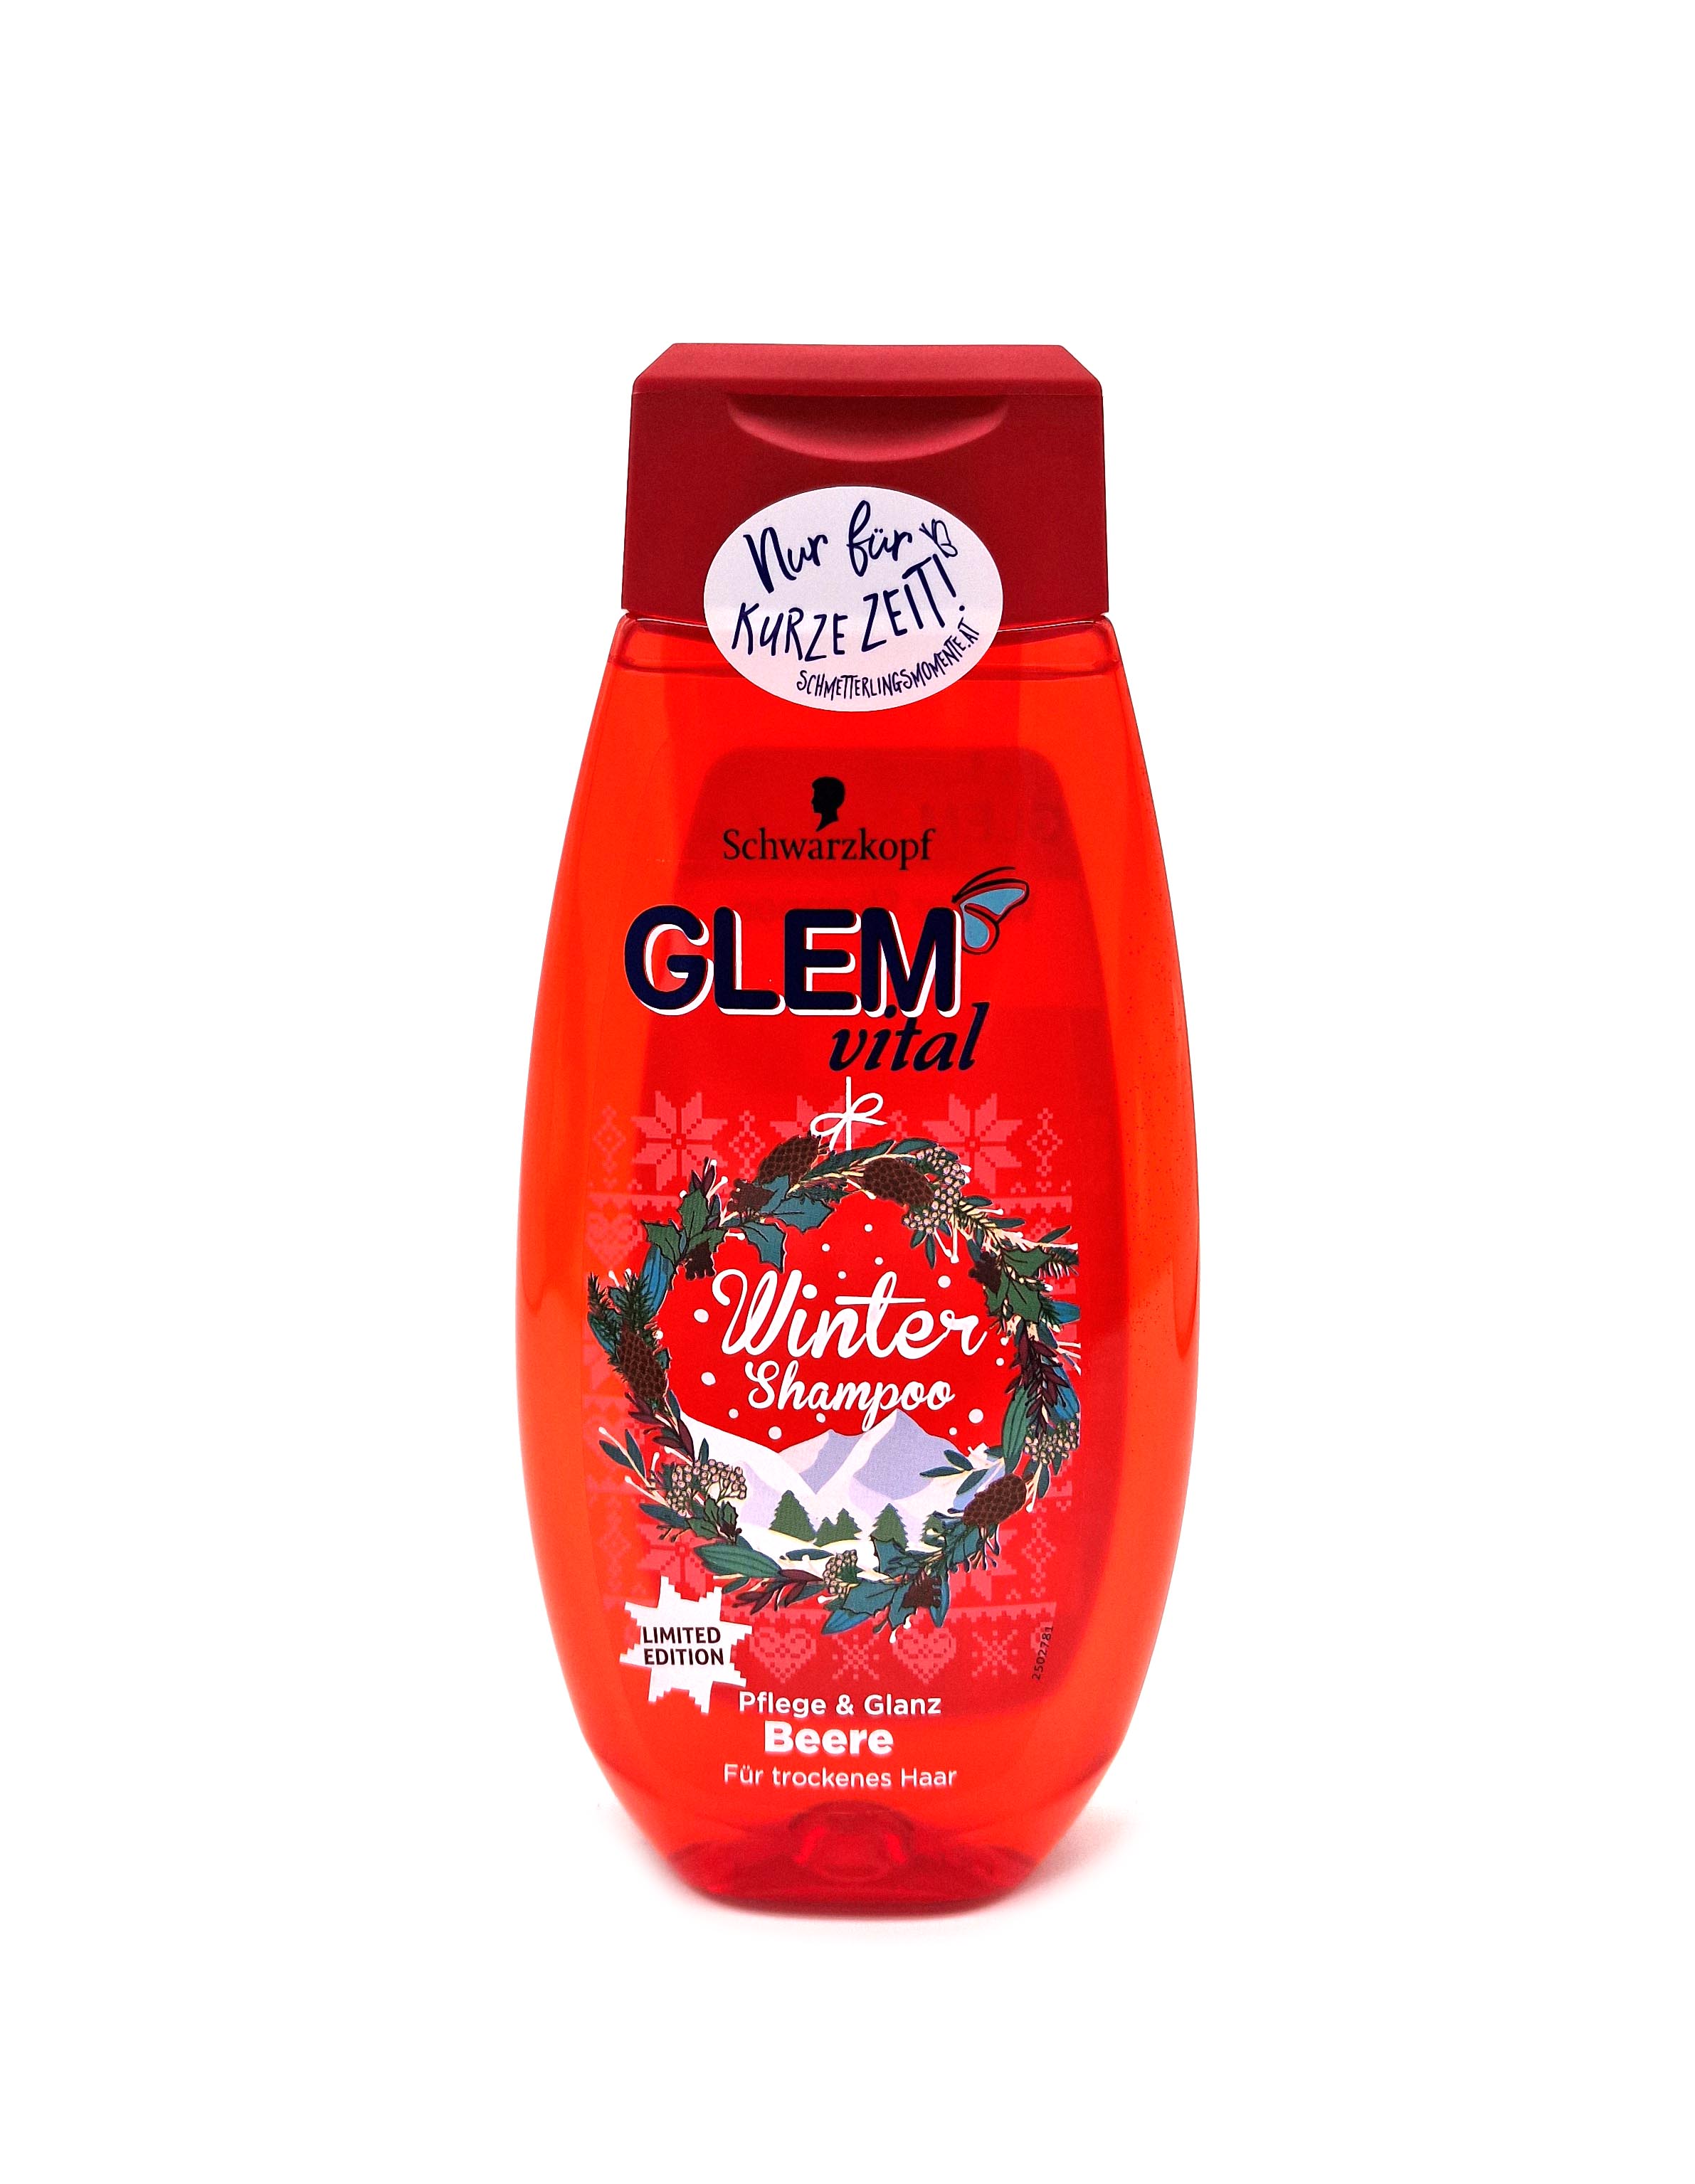 Glem Vital Winter-Shampoo Pflege & Glanz Beere Limited Edition 350ml